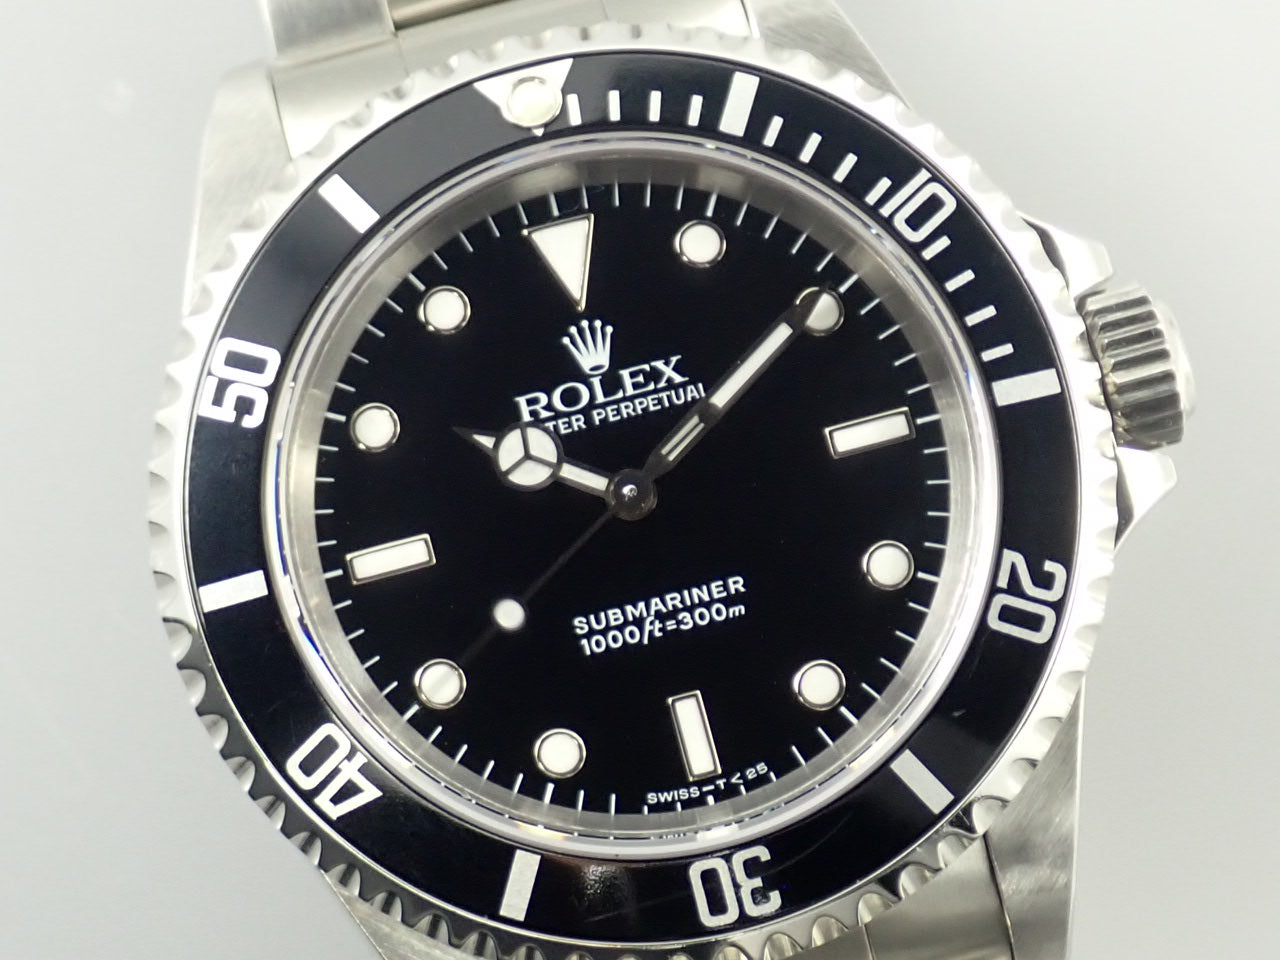 Rolex Submariner No Date W serial number &lt;Warranty, box, etc.&gt;